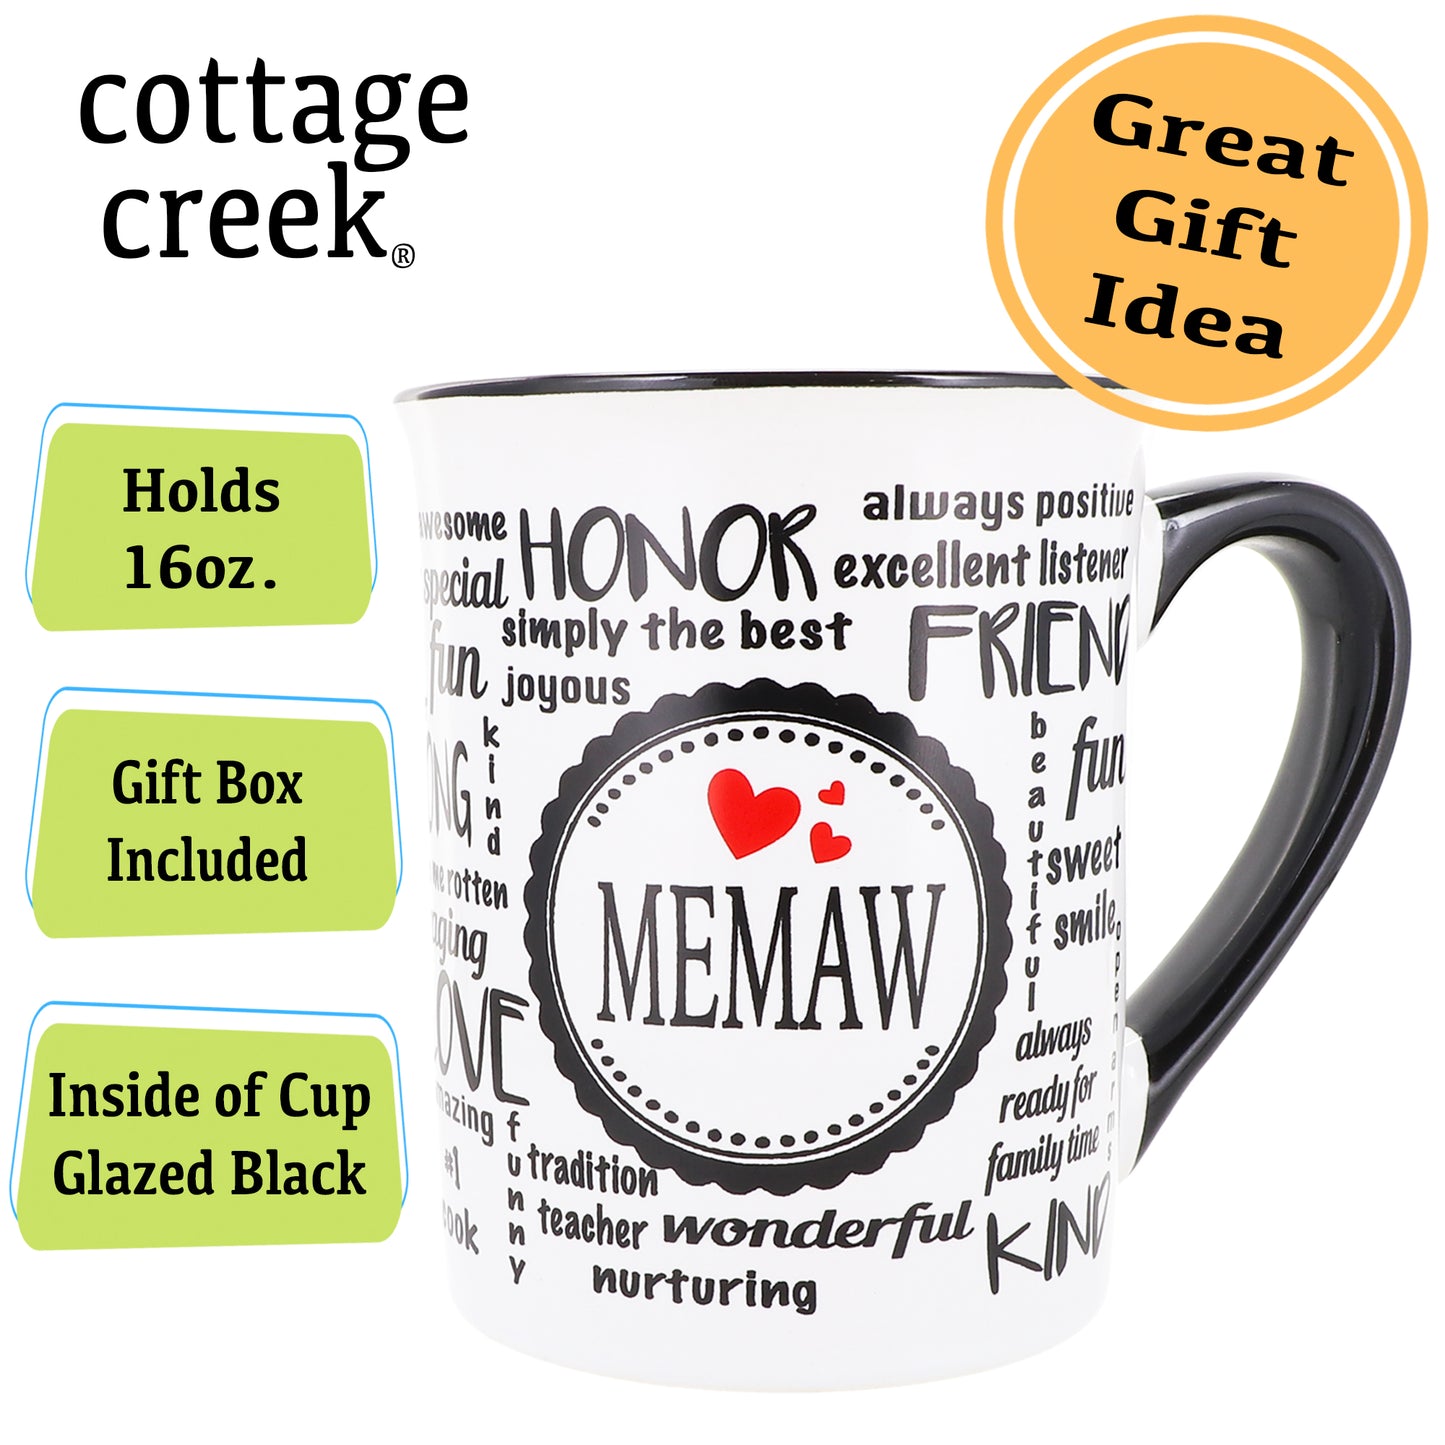 Cottage Creek Memaw Mug, Memaw Coffee Mug, Ceramic, 16oz., 6" Multicolored